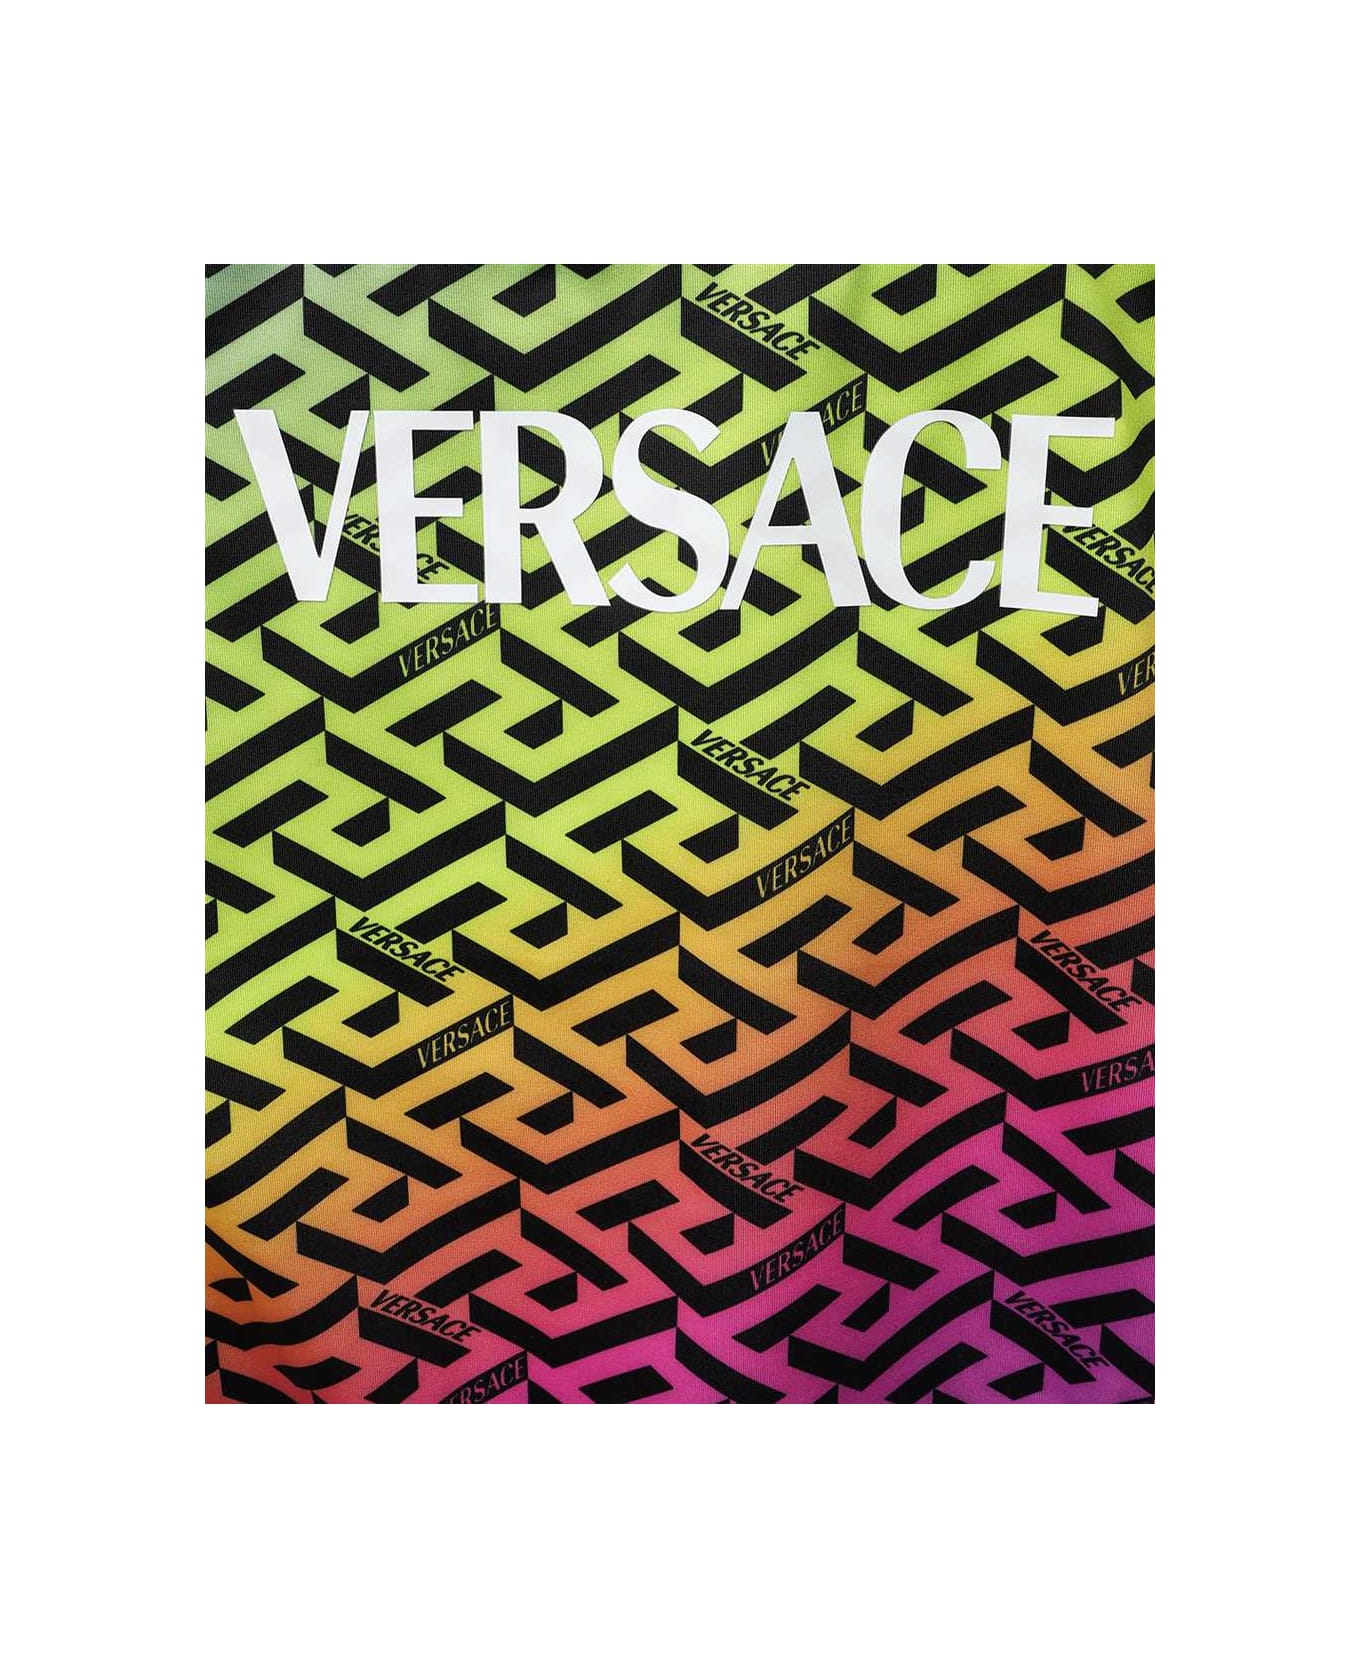 Versace One-piece Swimsuit With Logo - Multicolor 水着